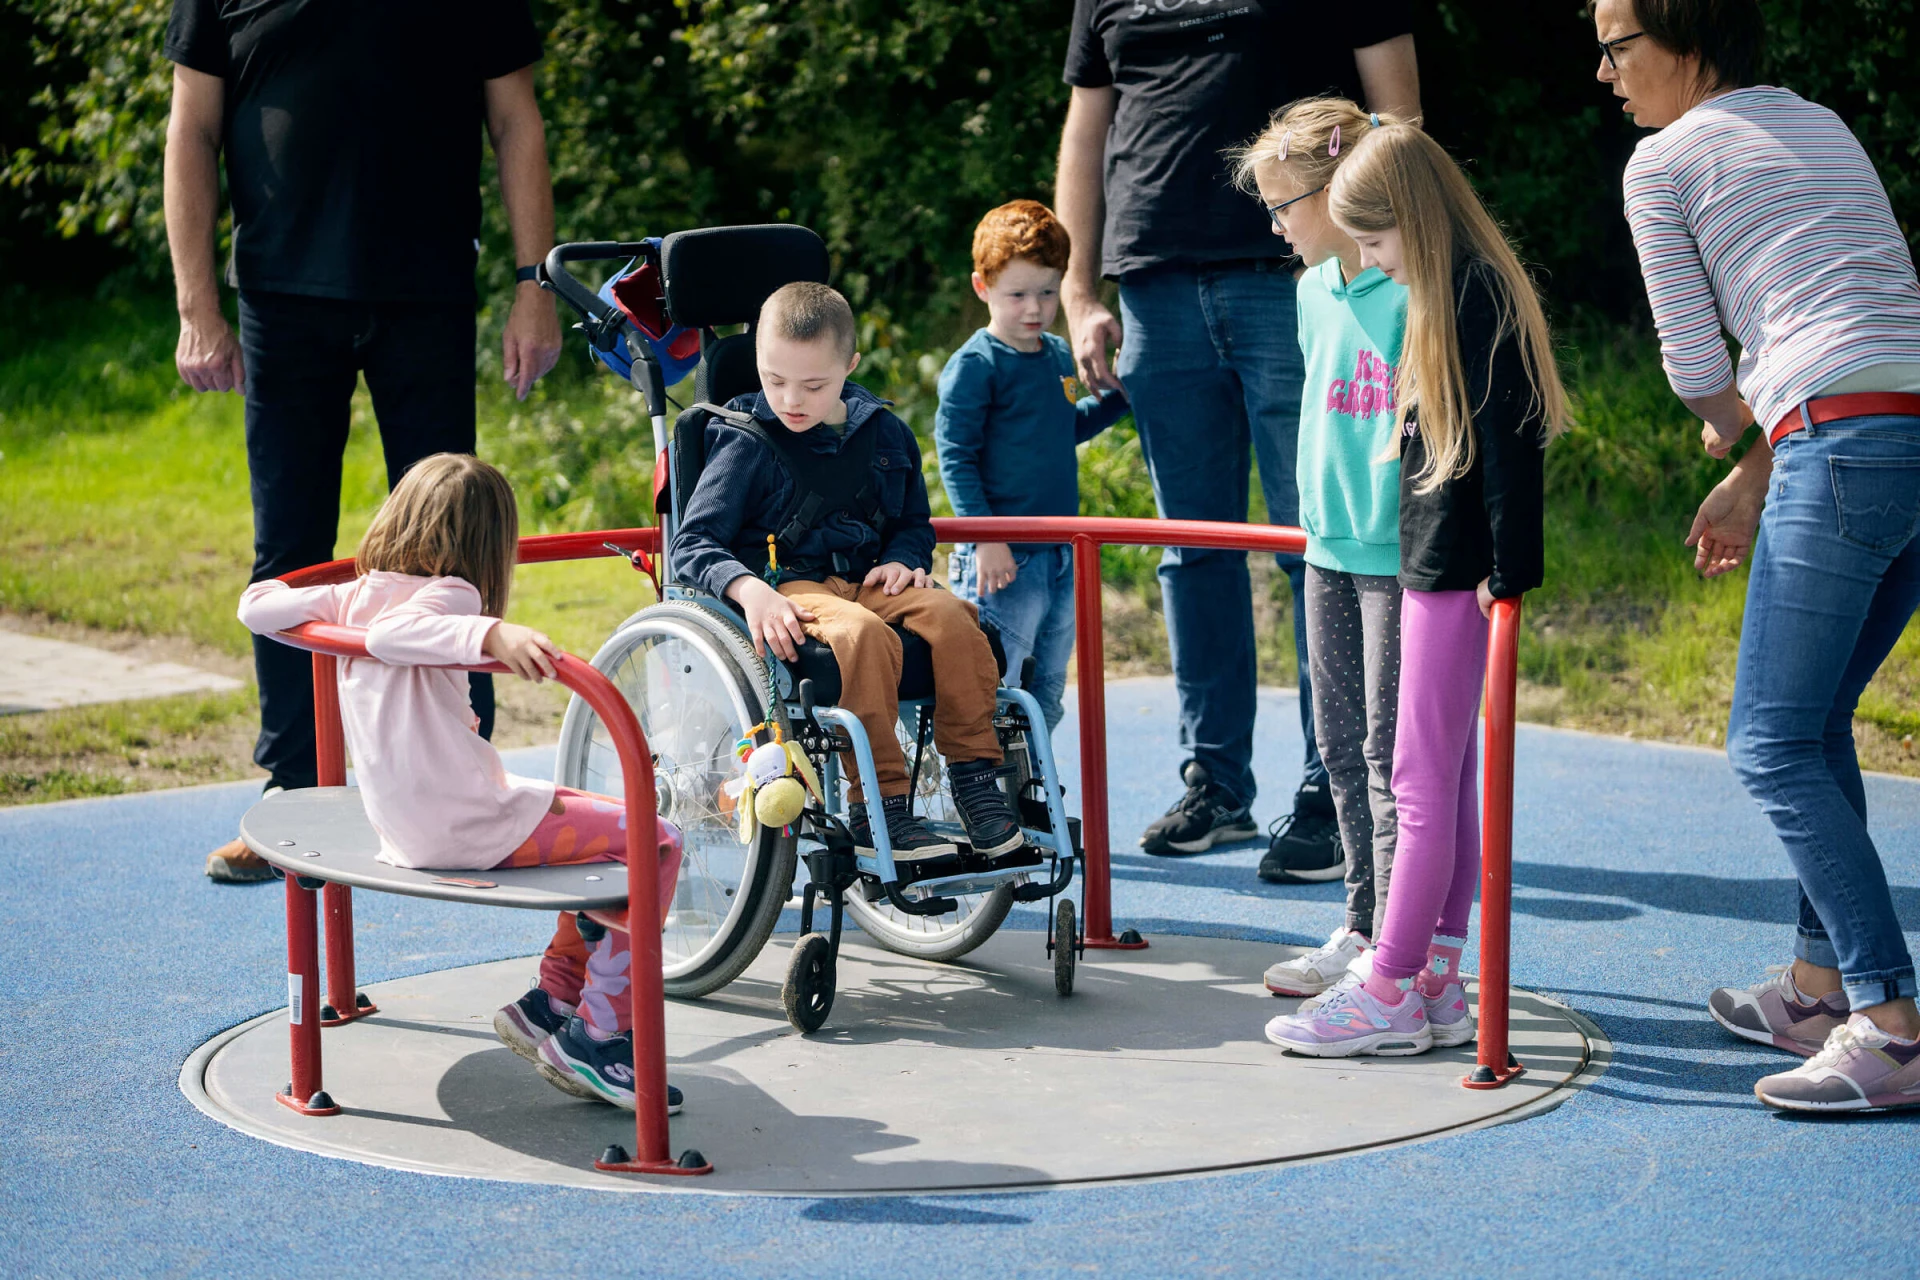 Barn leker på en rullstolskarusell på en lekplats